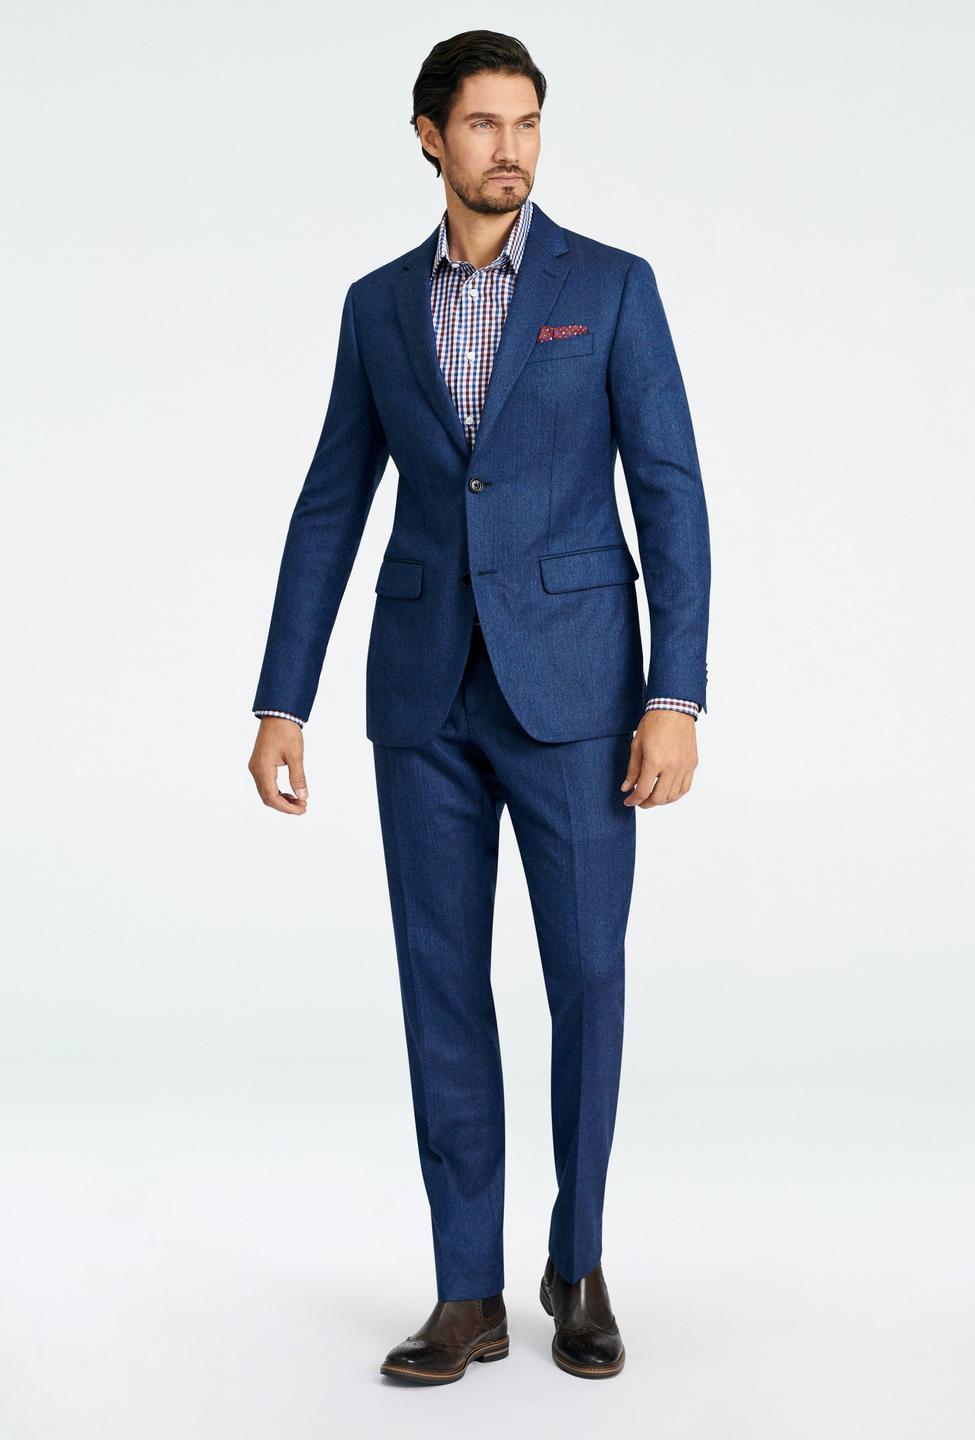 Blue suit - Prescot Herringbone Design from Seasonal Indochino Collection